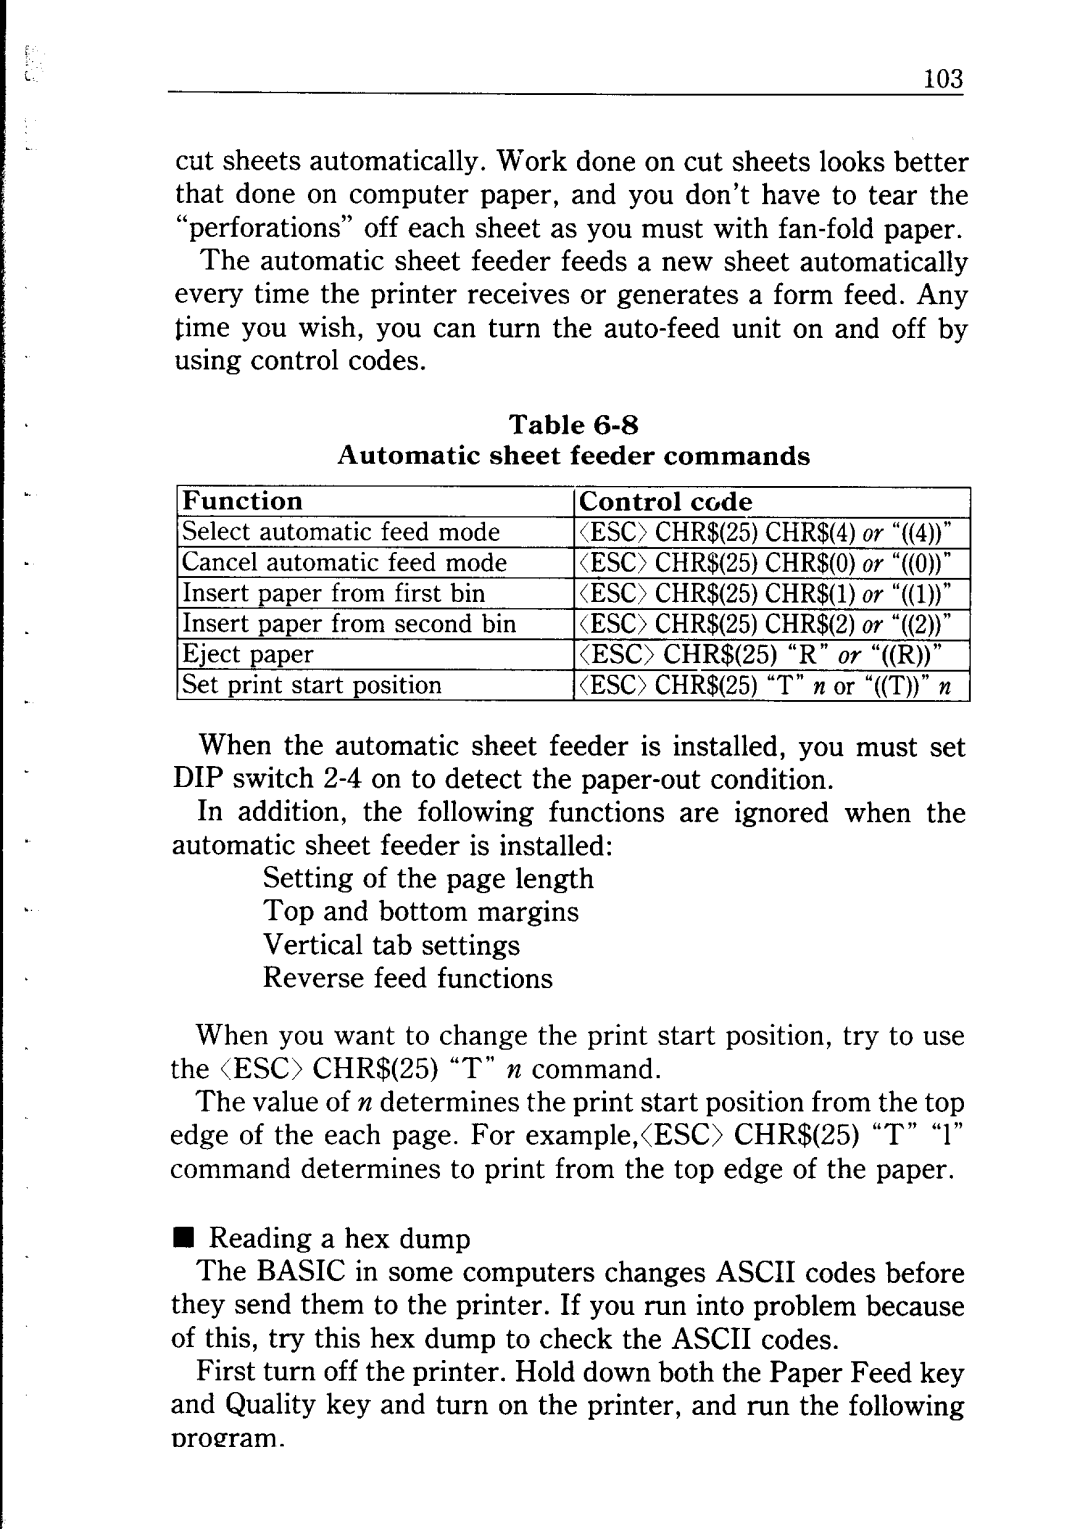 Star Micronics NB24-10/15 user manual Automatic, sheet feeder commands, 1Control ctide 